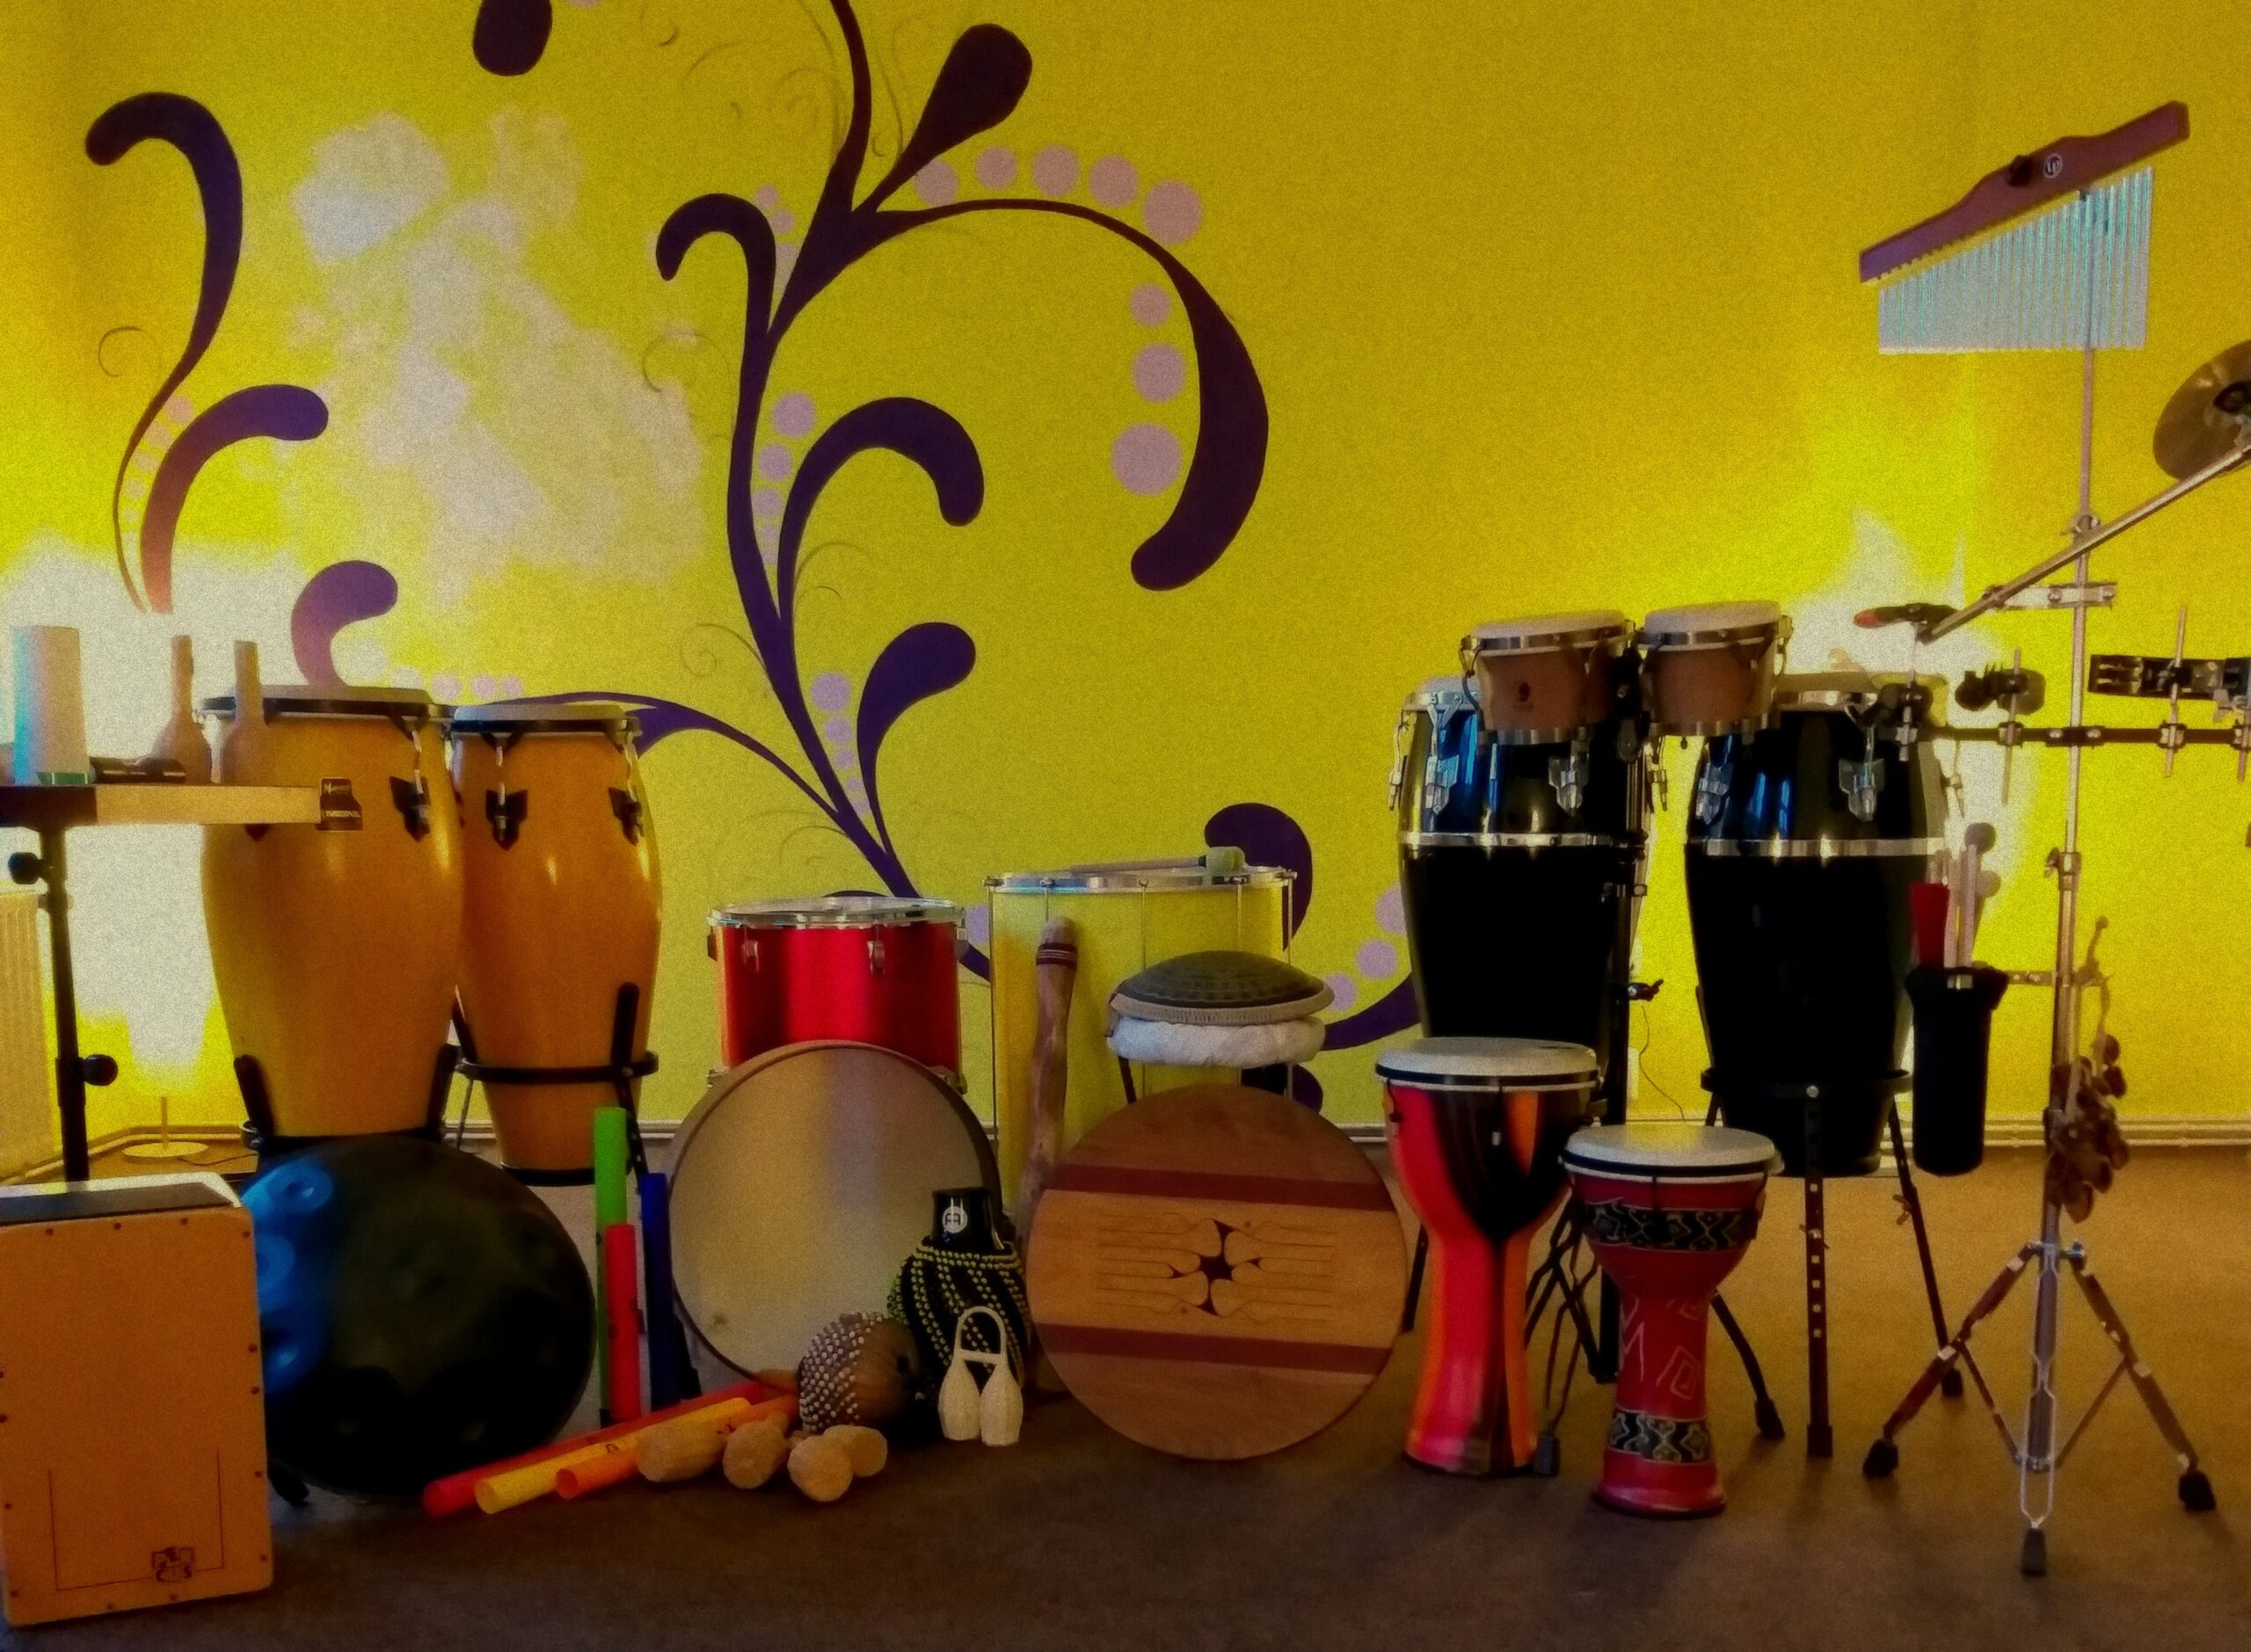 Drum-Circle - Harmonie in Rhythmus, Klang & Percussion!